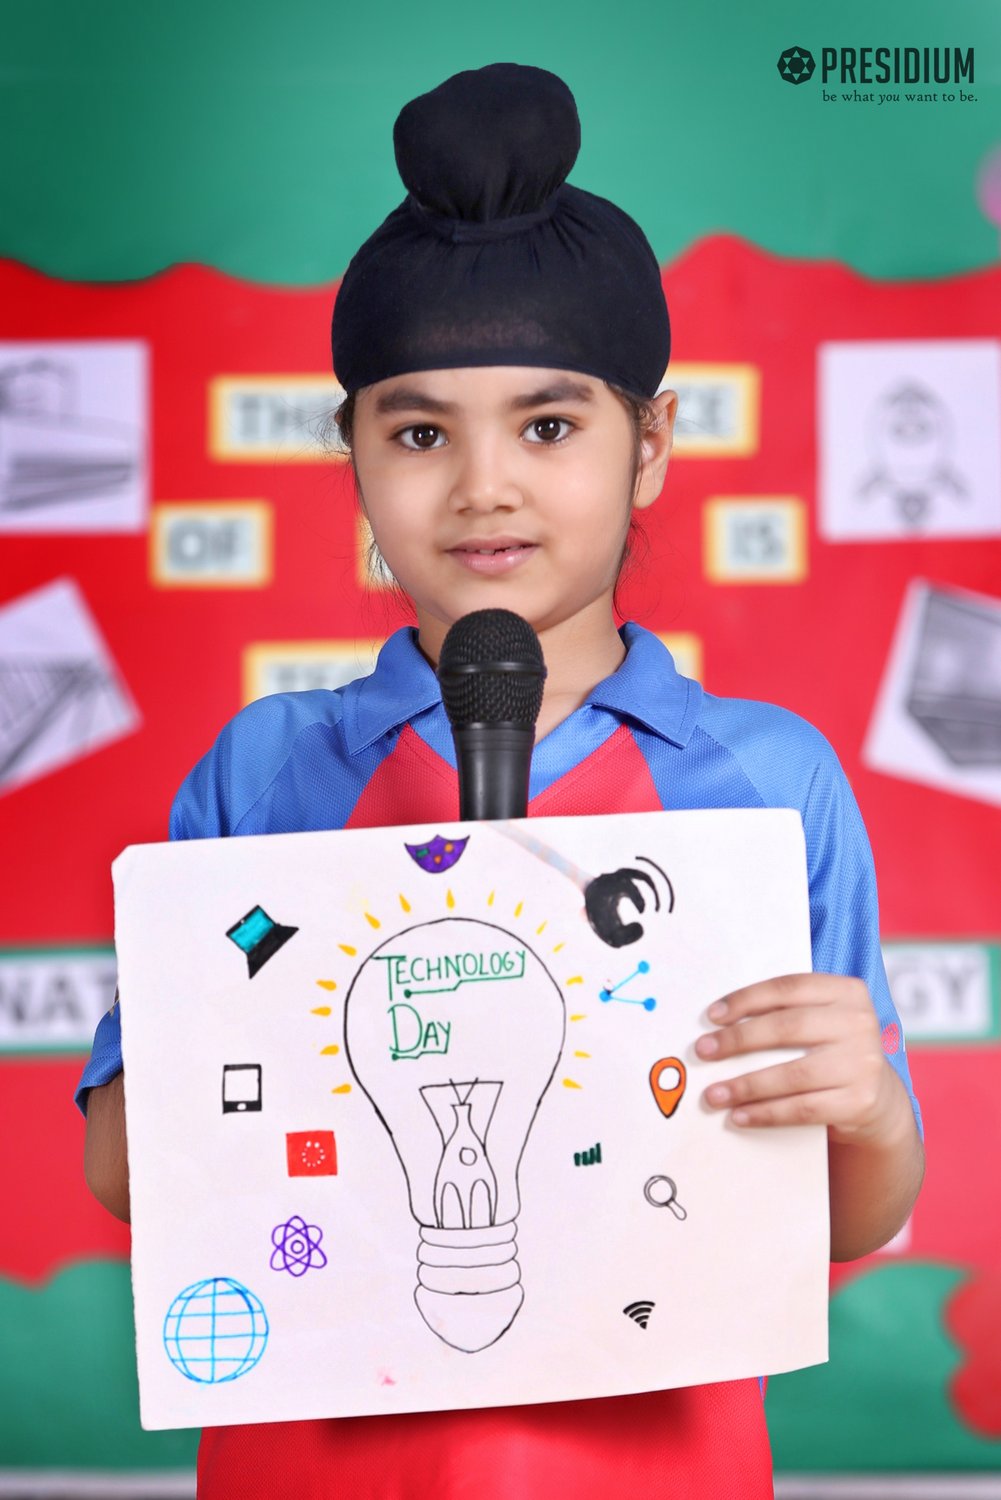 Presidium Vivek Vihar, NATIONAL TECHNOLOGY DAY: ONE IDEA CHANGES THE FUTURE! 